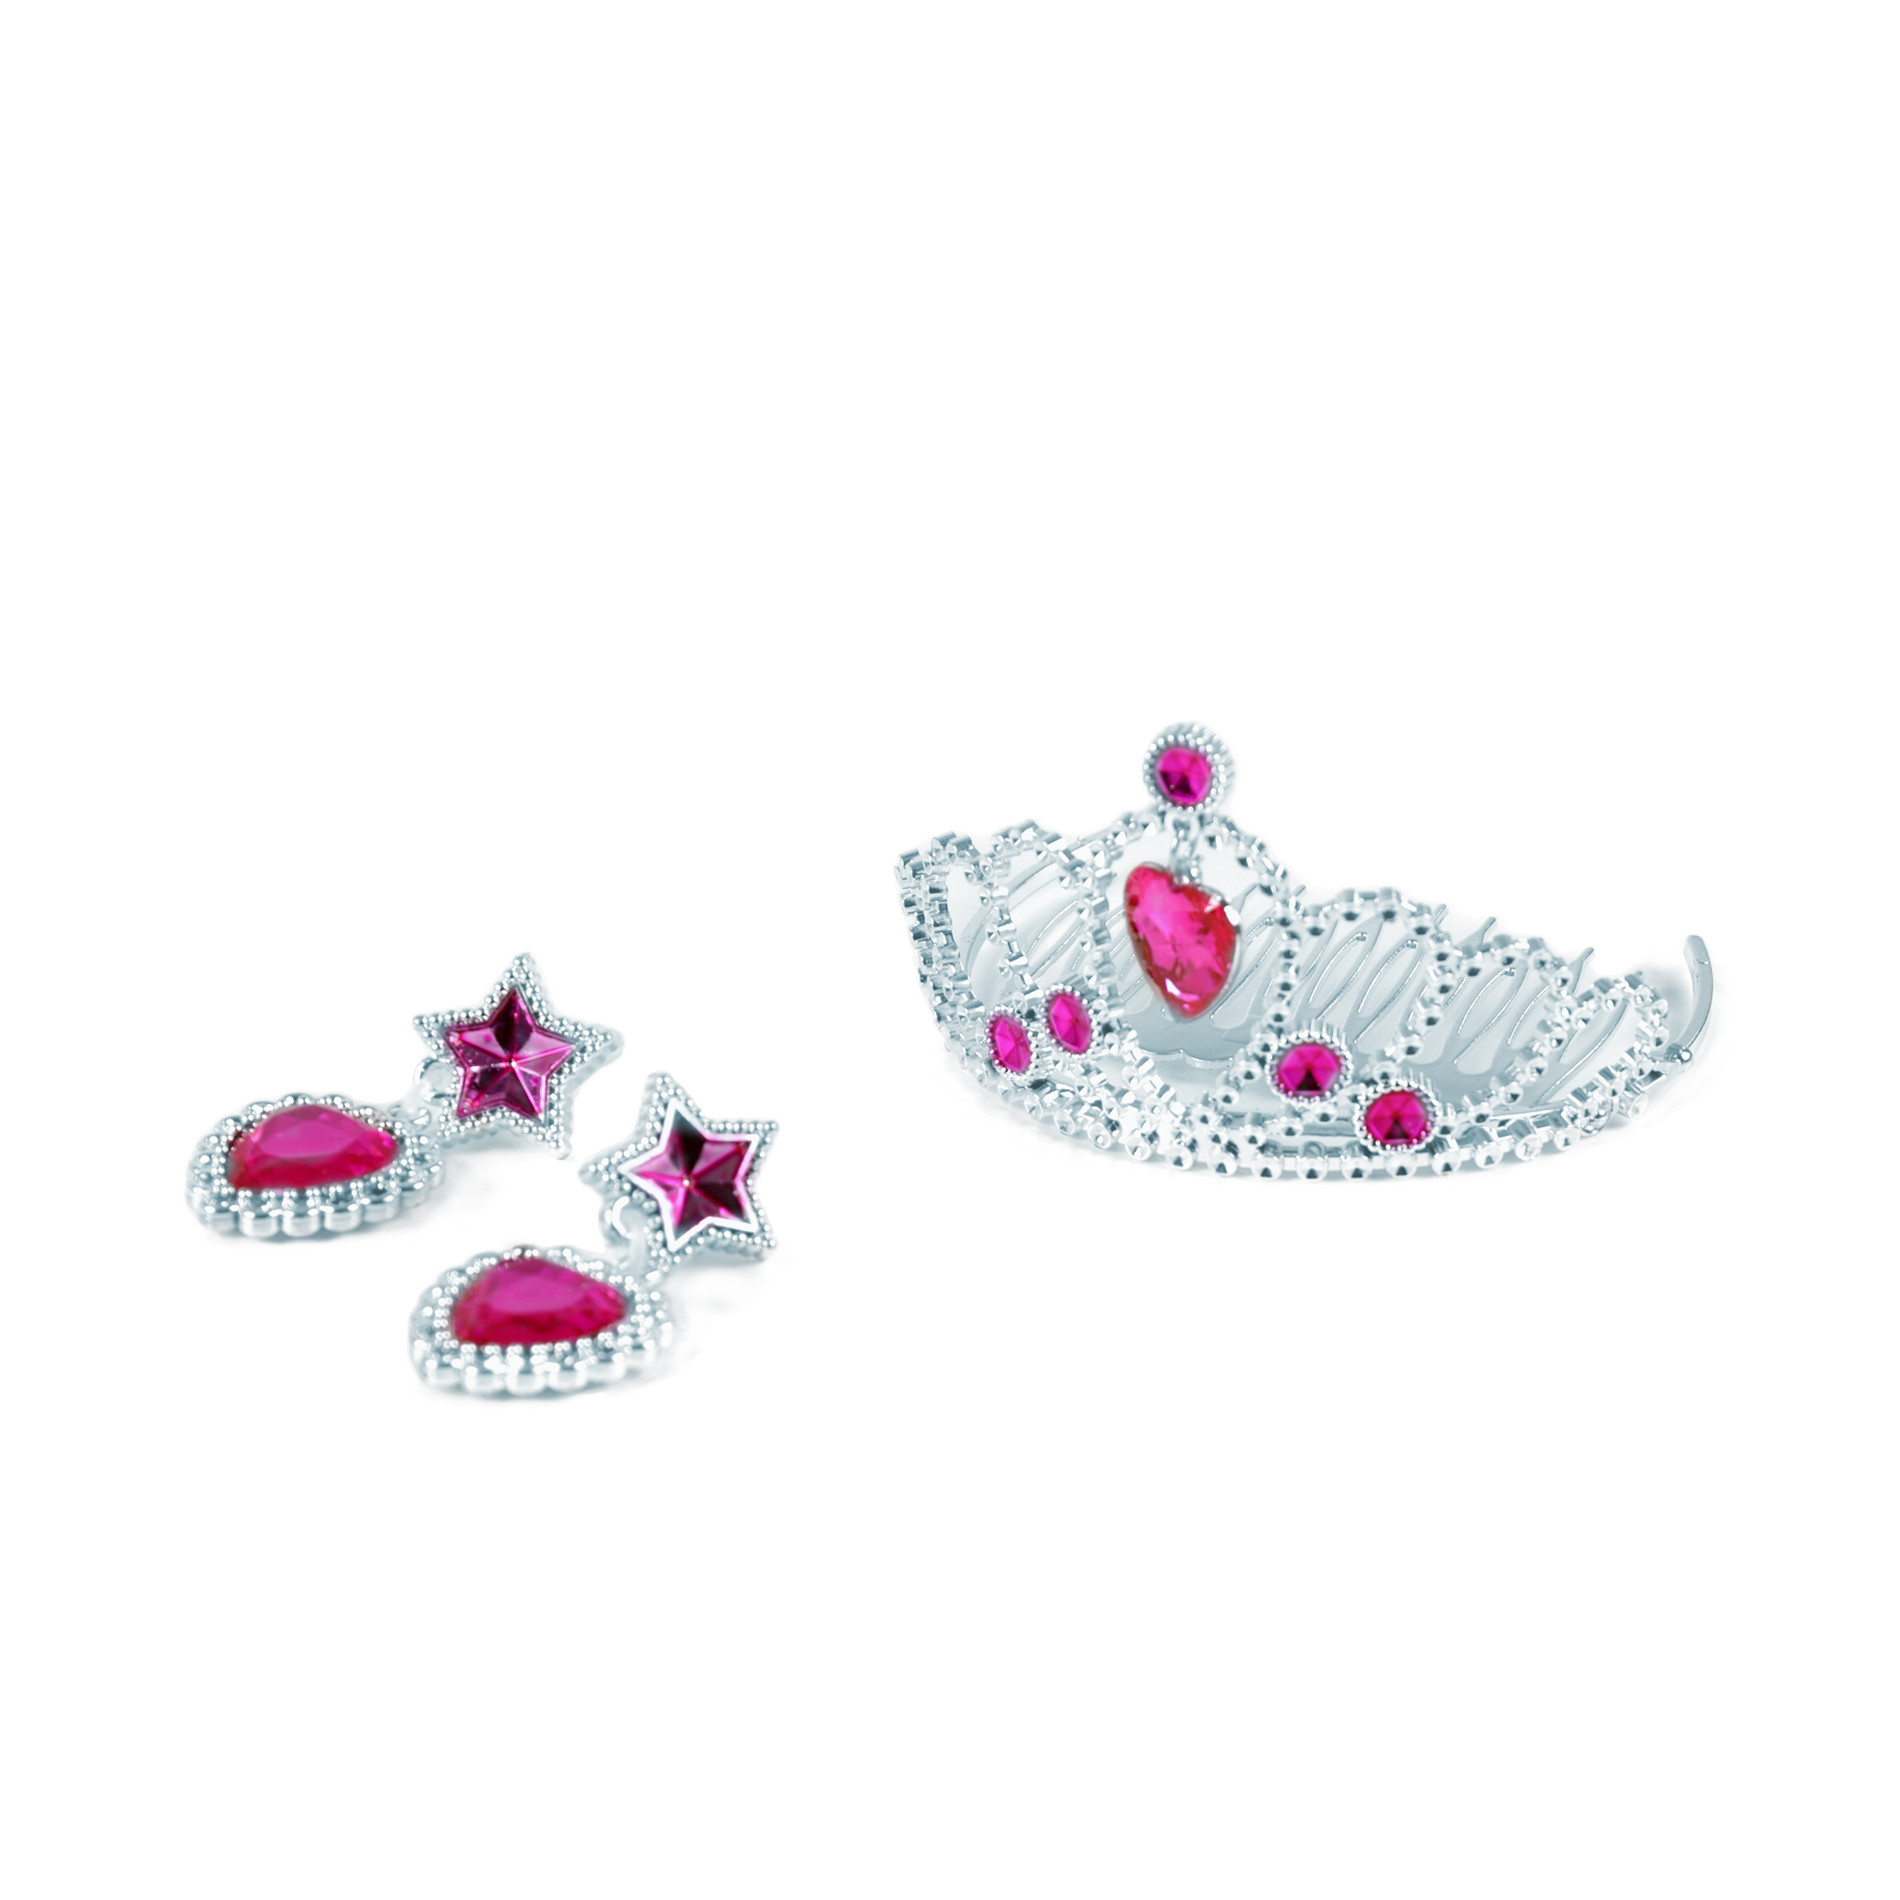 Princess crown with pink earrings